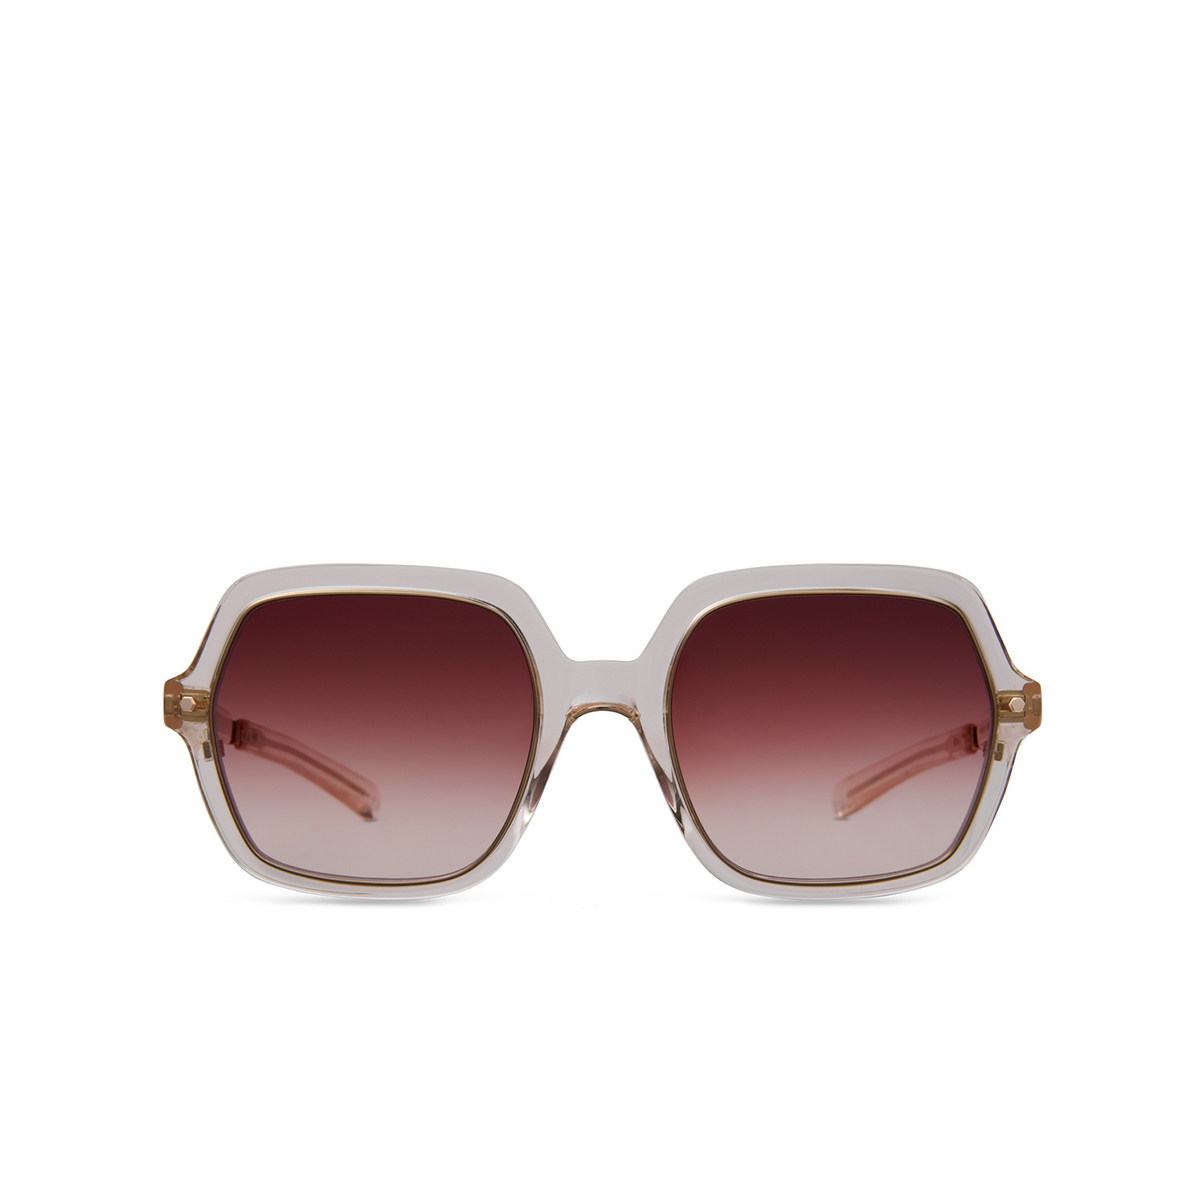 Mr. Leight SOFIA S Sunglasses BLSH-18KRG/PEO Blush-18K Rose Gold - front view